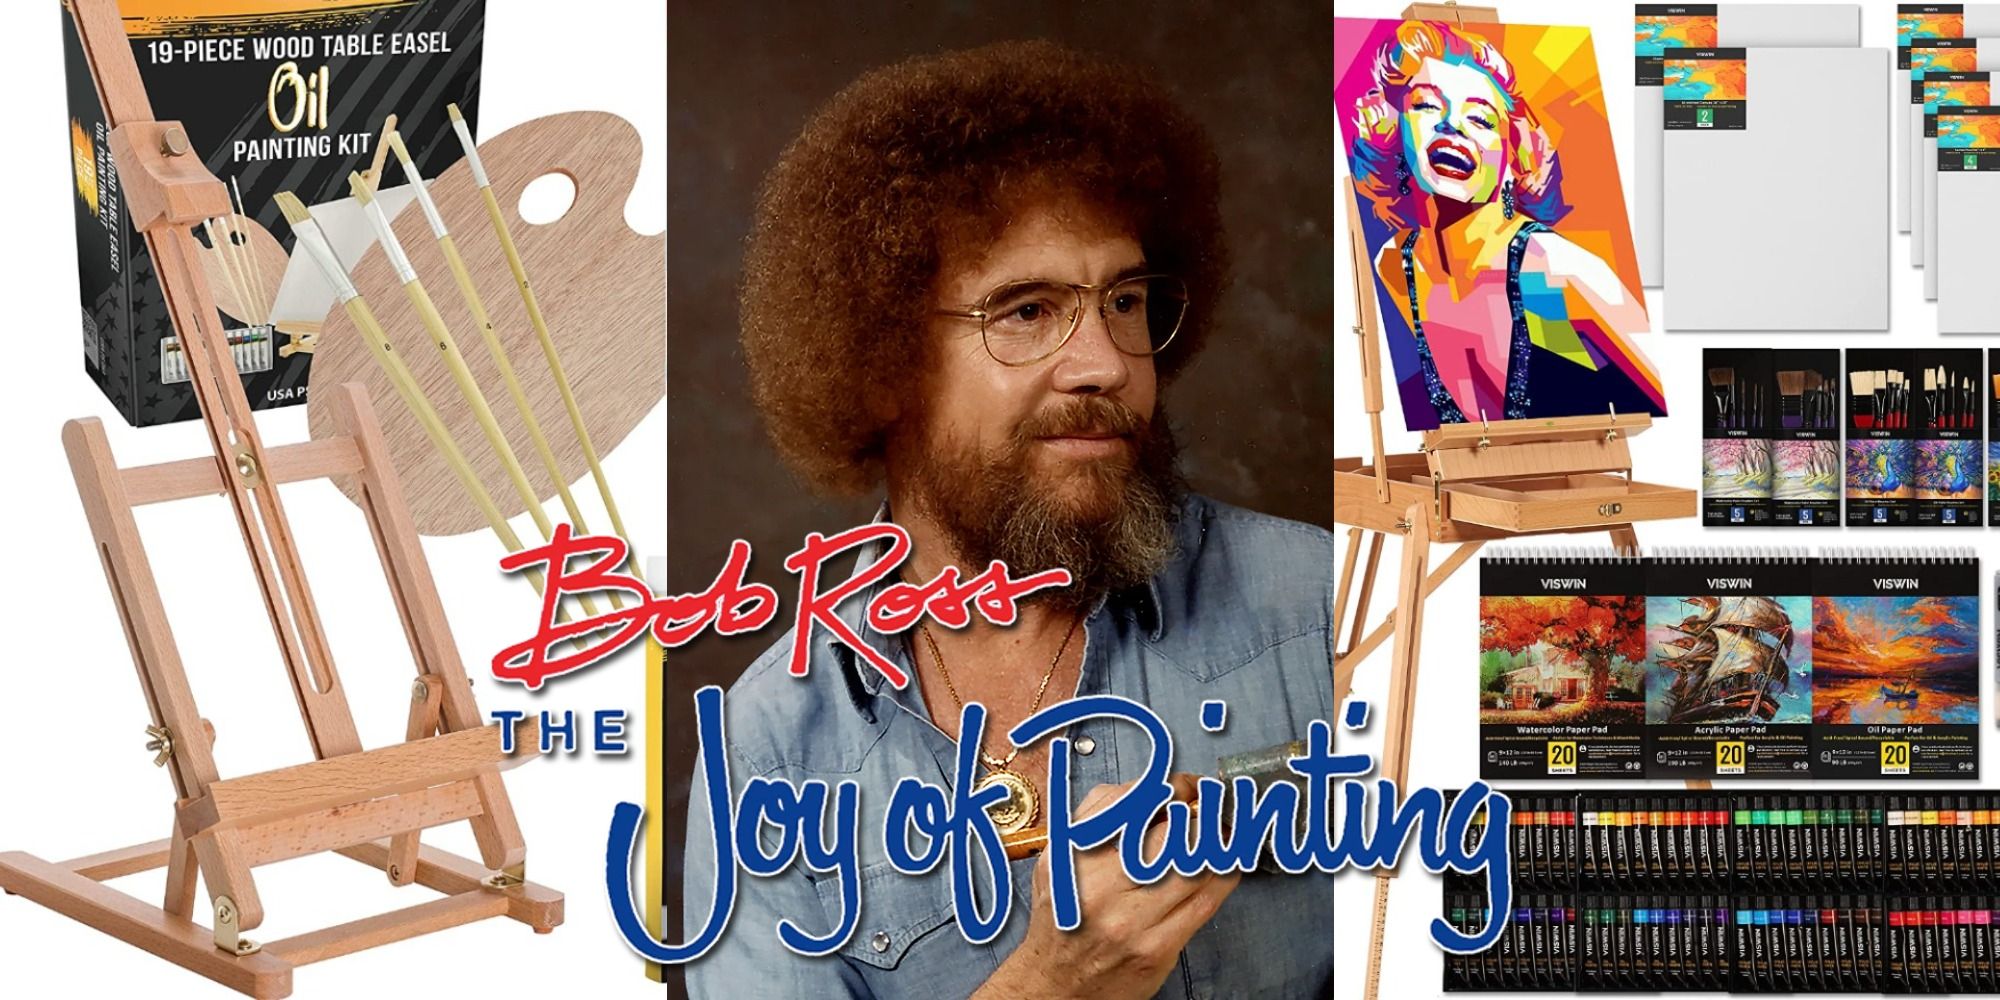 Bobross Painting Supplies 19 Piece Flagship Master Paint Set - the Joy